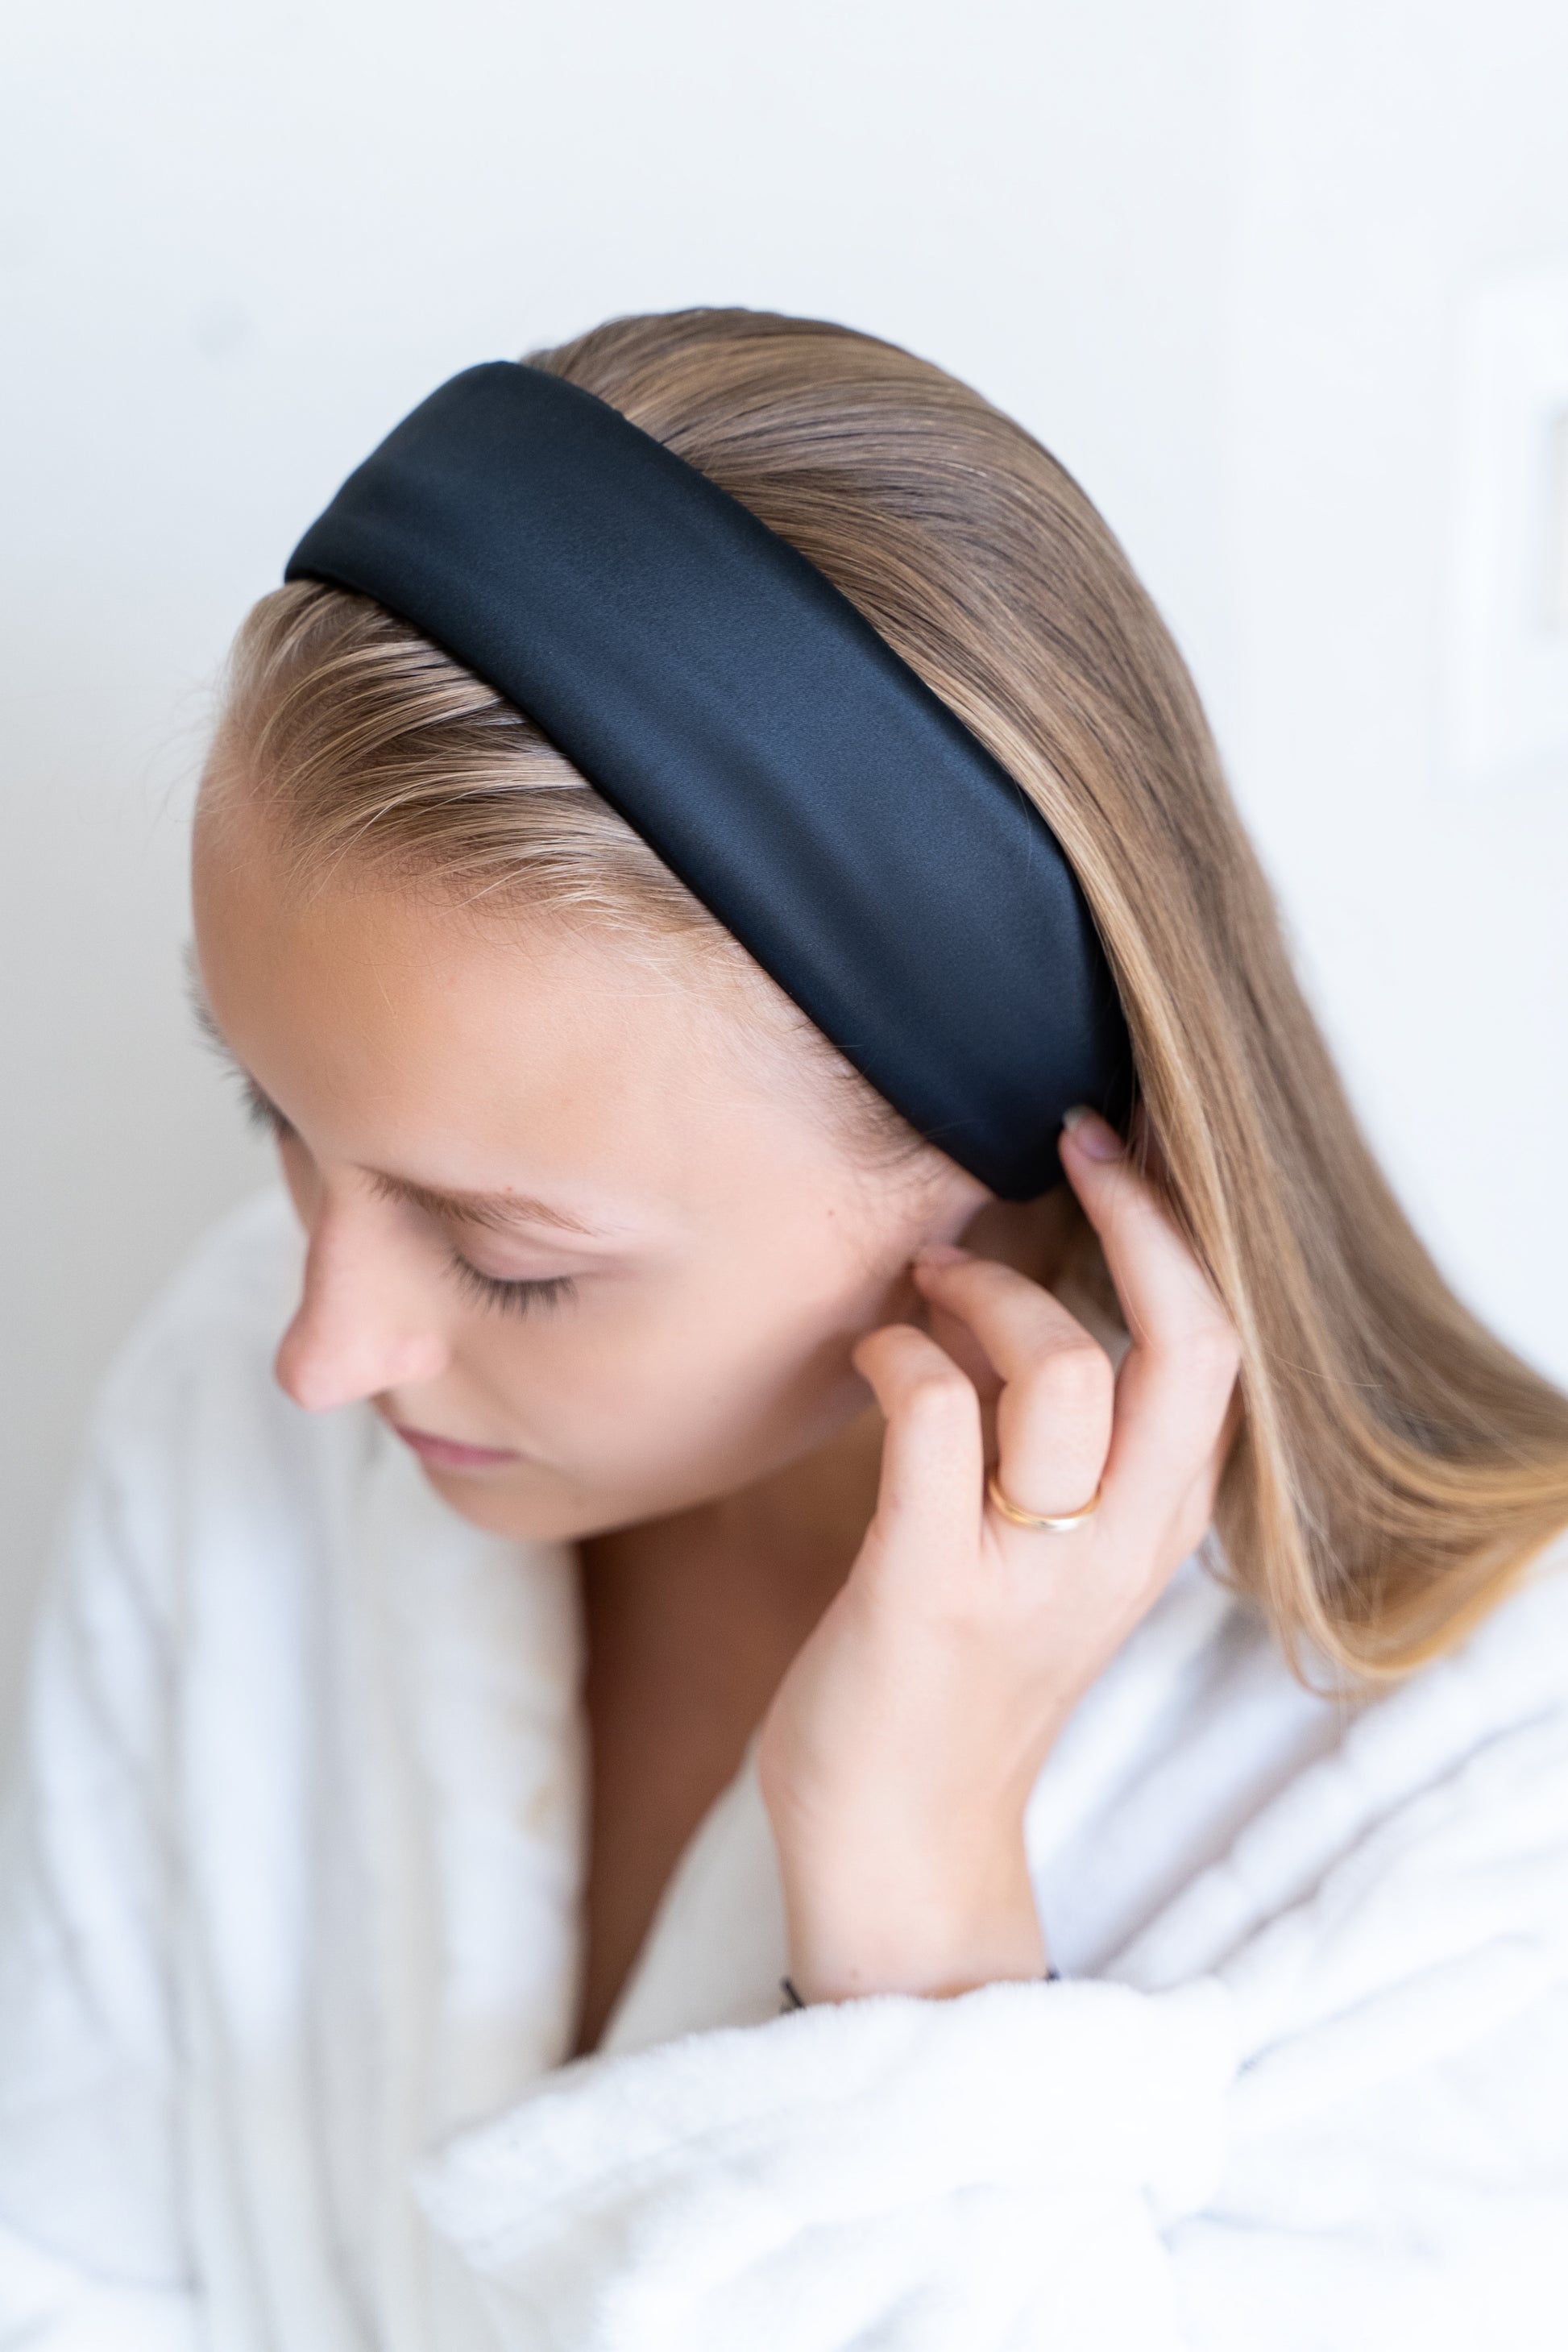 15 Cool Headbands & Head Wraps For Girls & Women